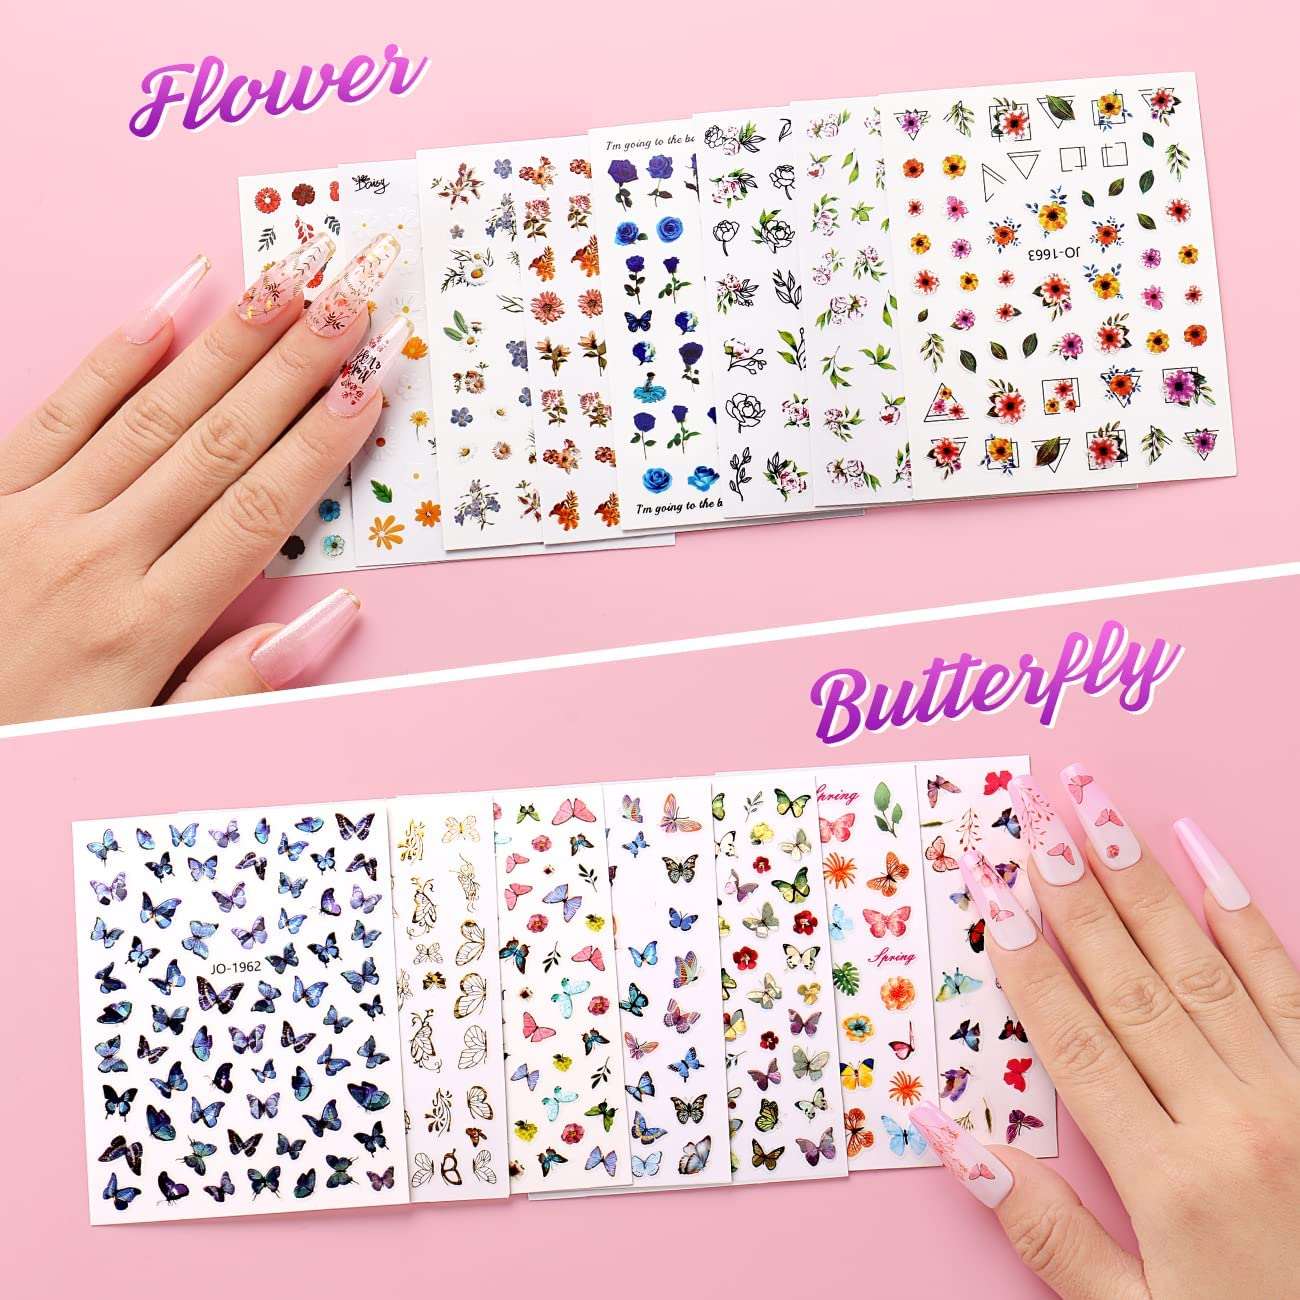 Nail Art Stickers Decals Flower Butterfly Green Leaf Design DIY